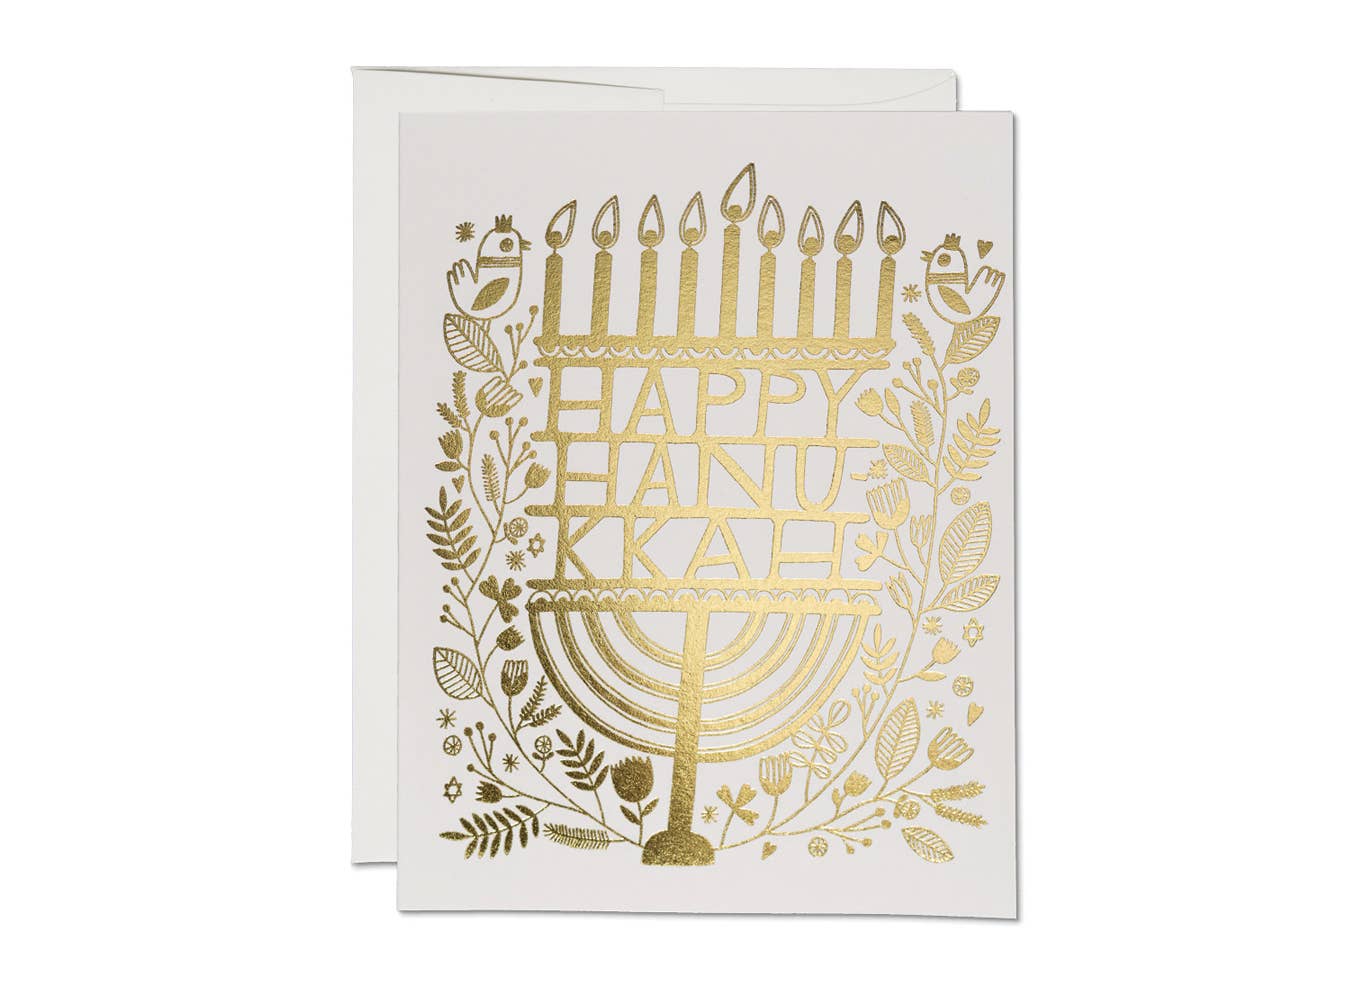 Hanukkah Candles Hanukkah greeting card: Singles - The Crowd Went Wild